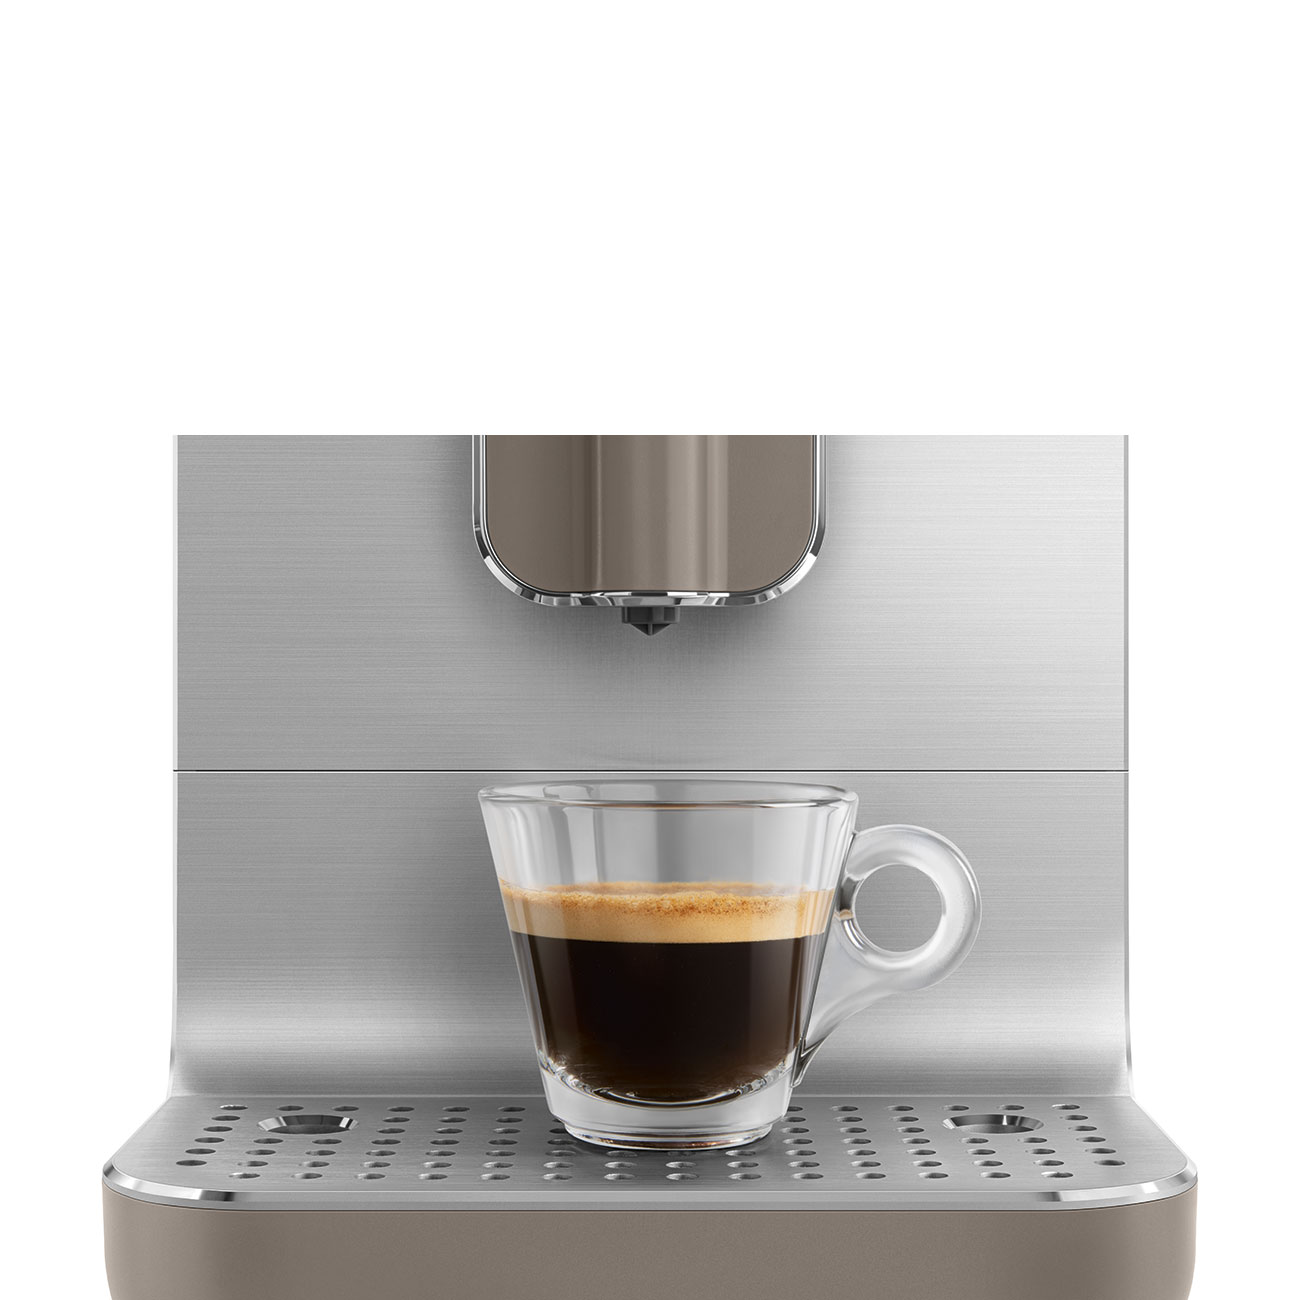 Smeg Taupe Espresso Manual Coffee Machine_9